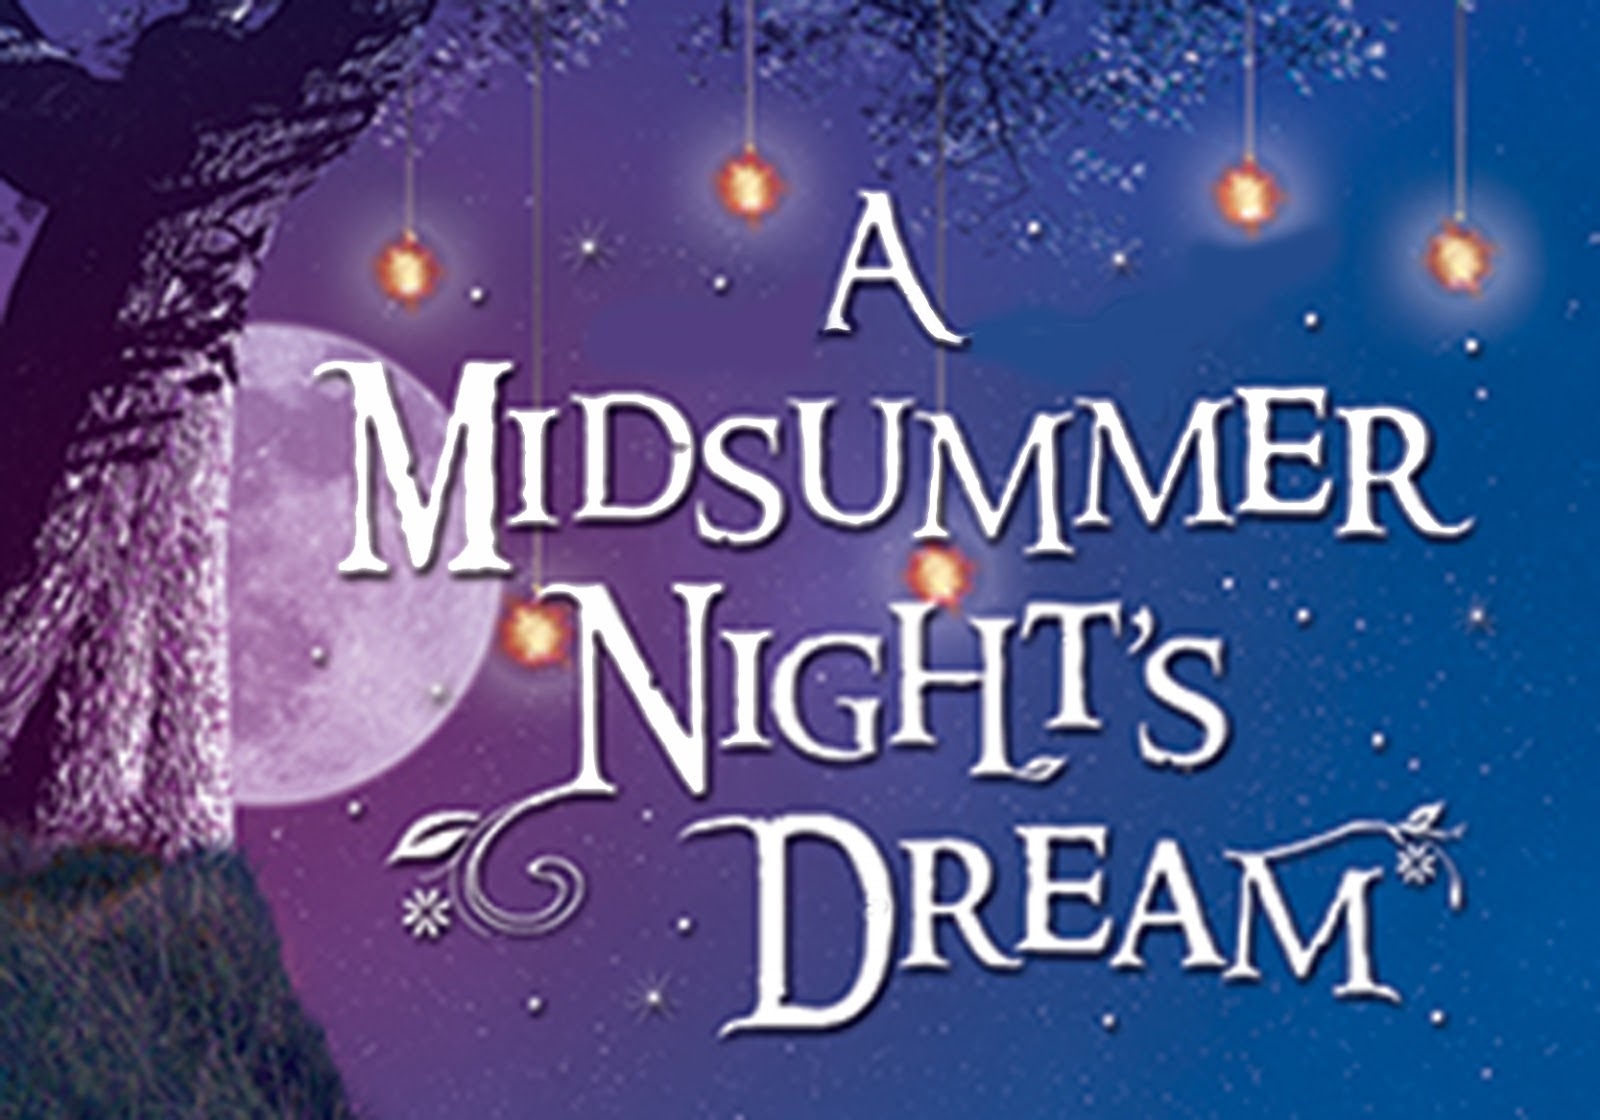 A Midsummer Night's Dream: Full Book Analysis